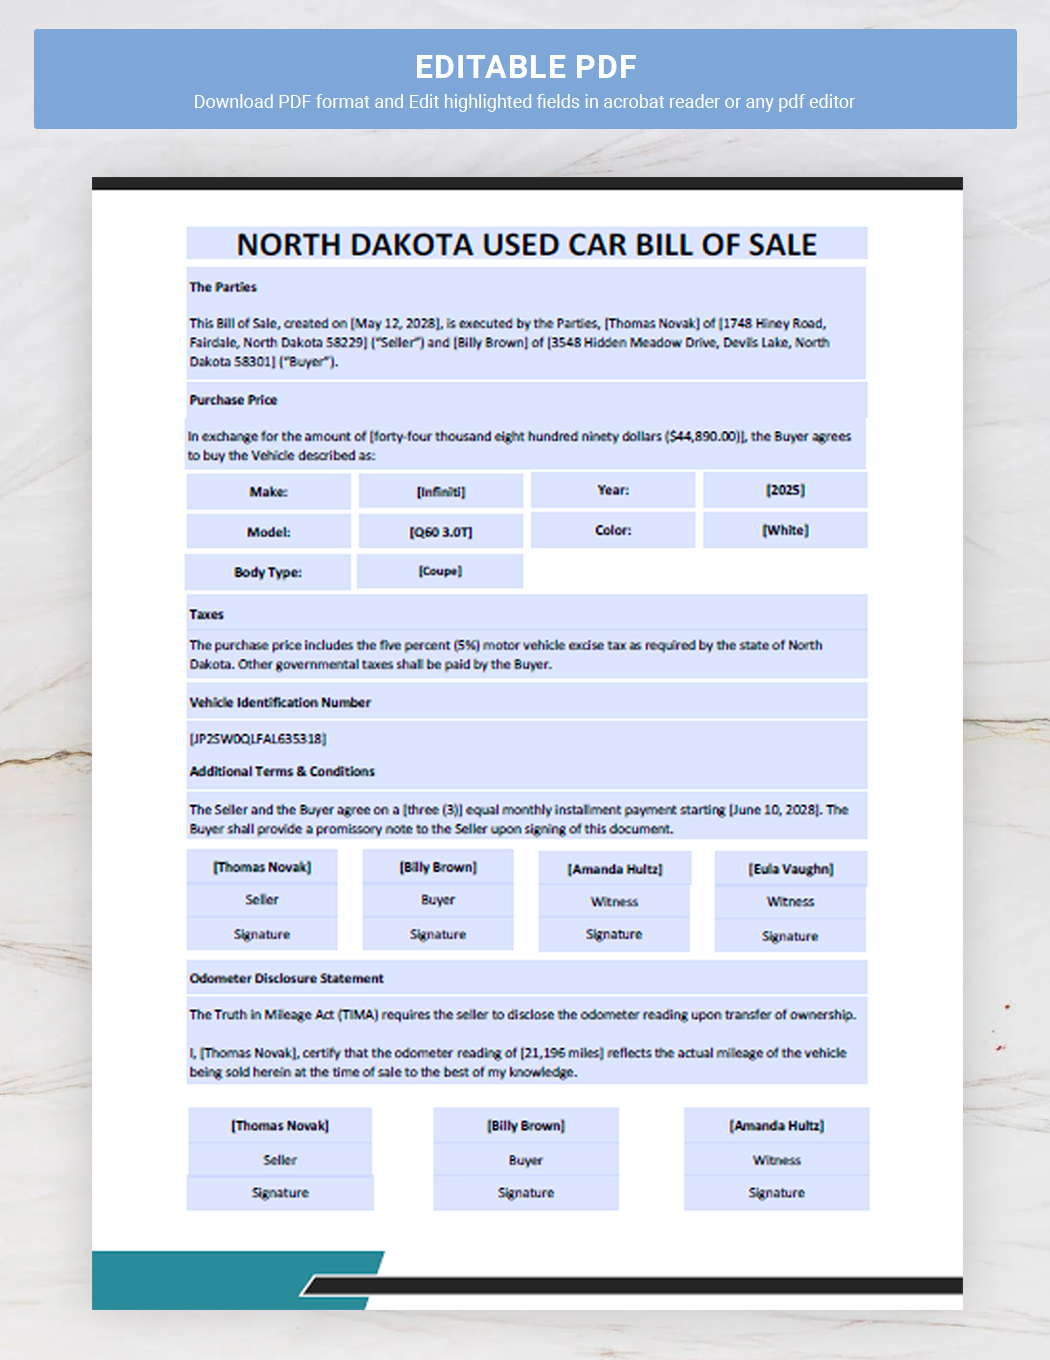 North Dakota Used Car Bill of Sale Template